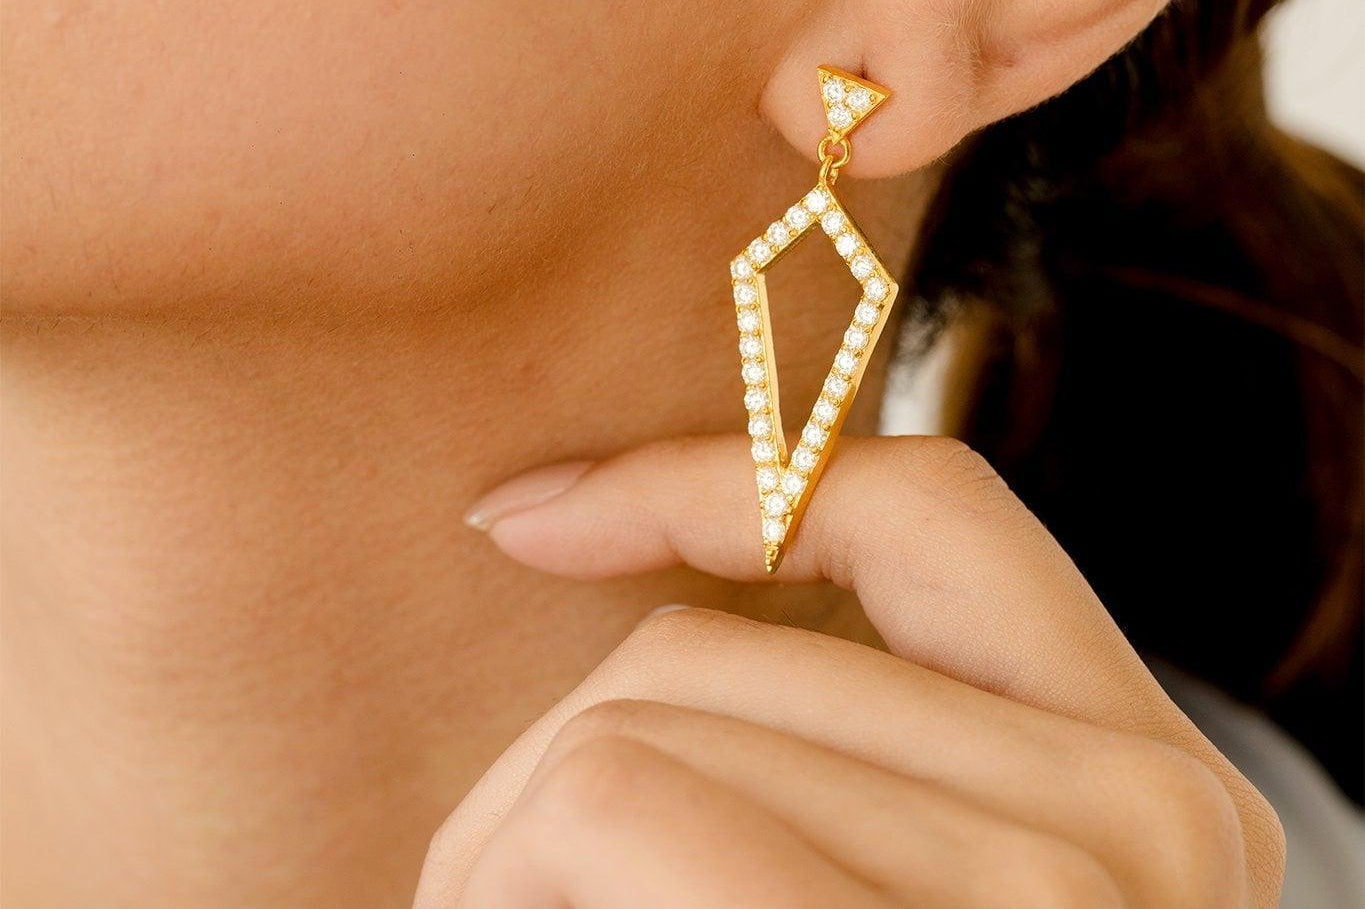 Genuine Gold Dangle Earrings, White/Yellow Gold Earrings for Ladies, Natural White Diamond Earrings, Designer Gift for-Wedding - GeumJewels